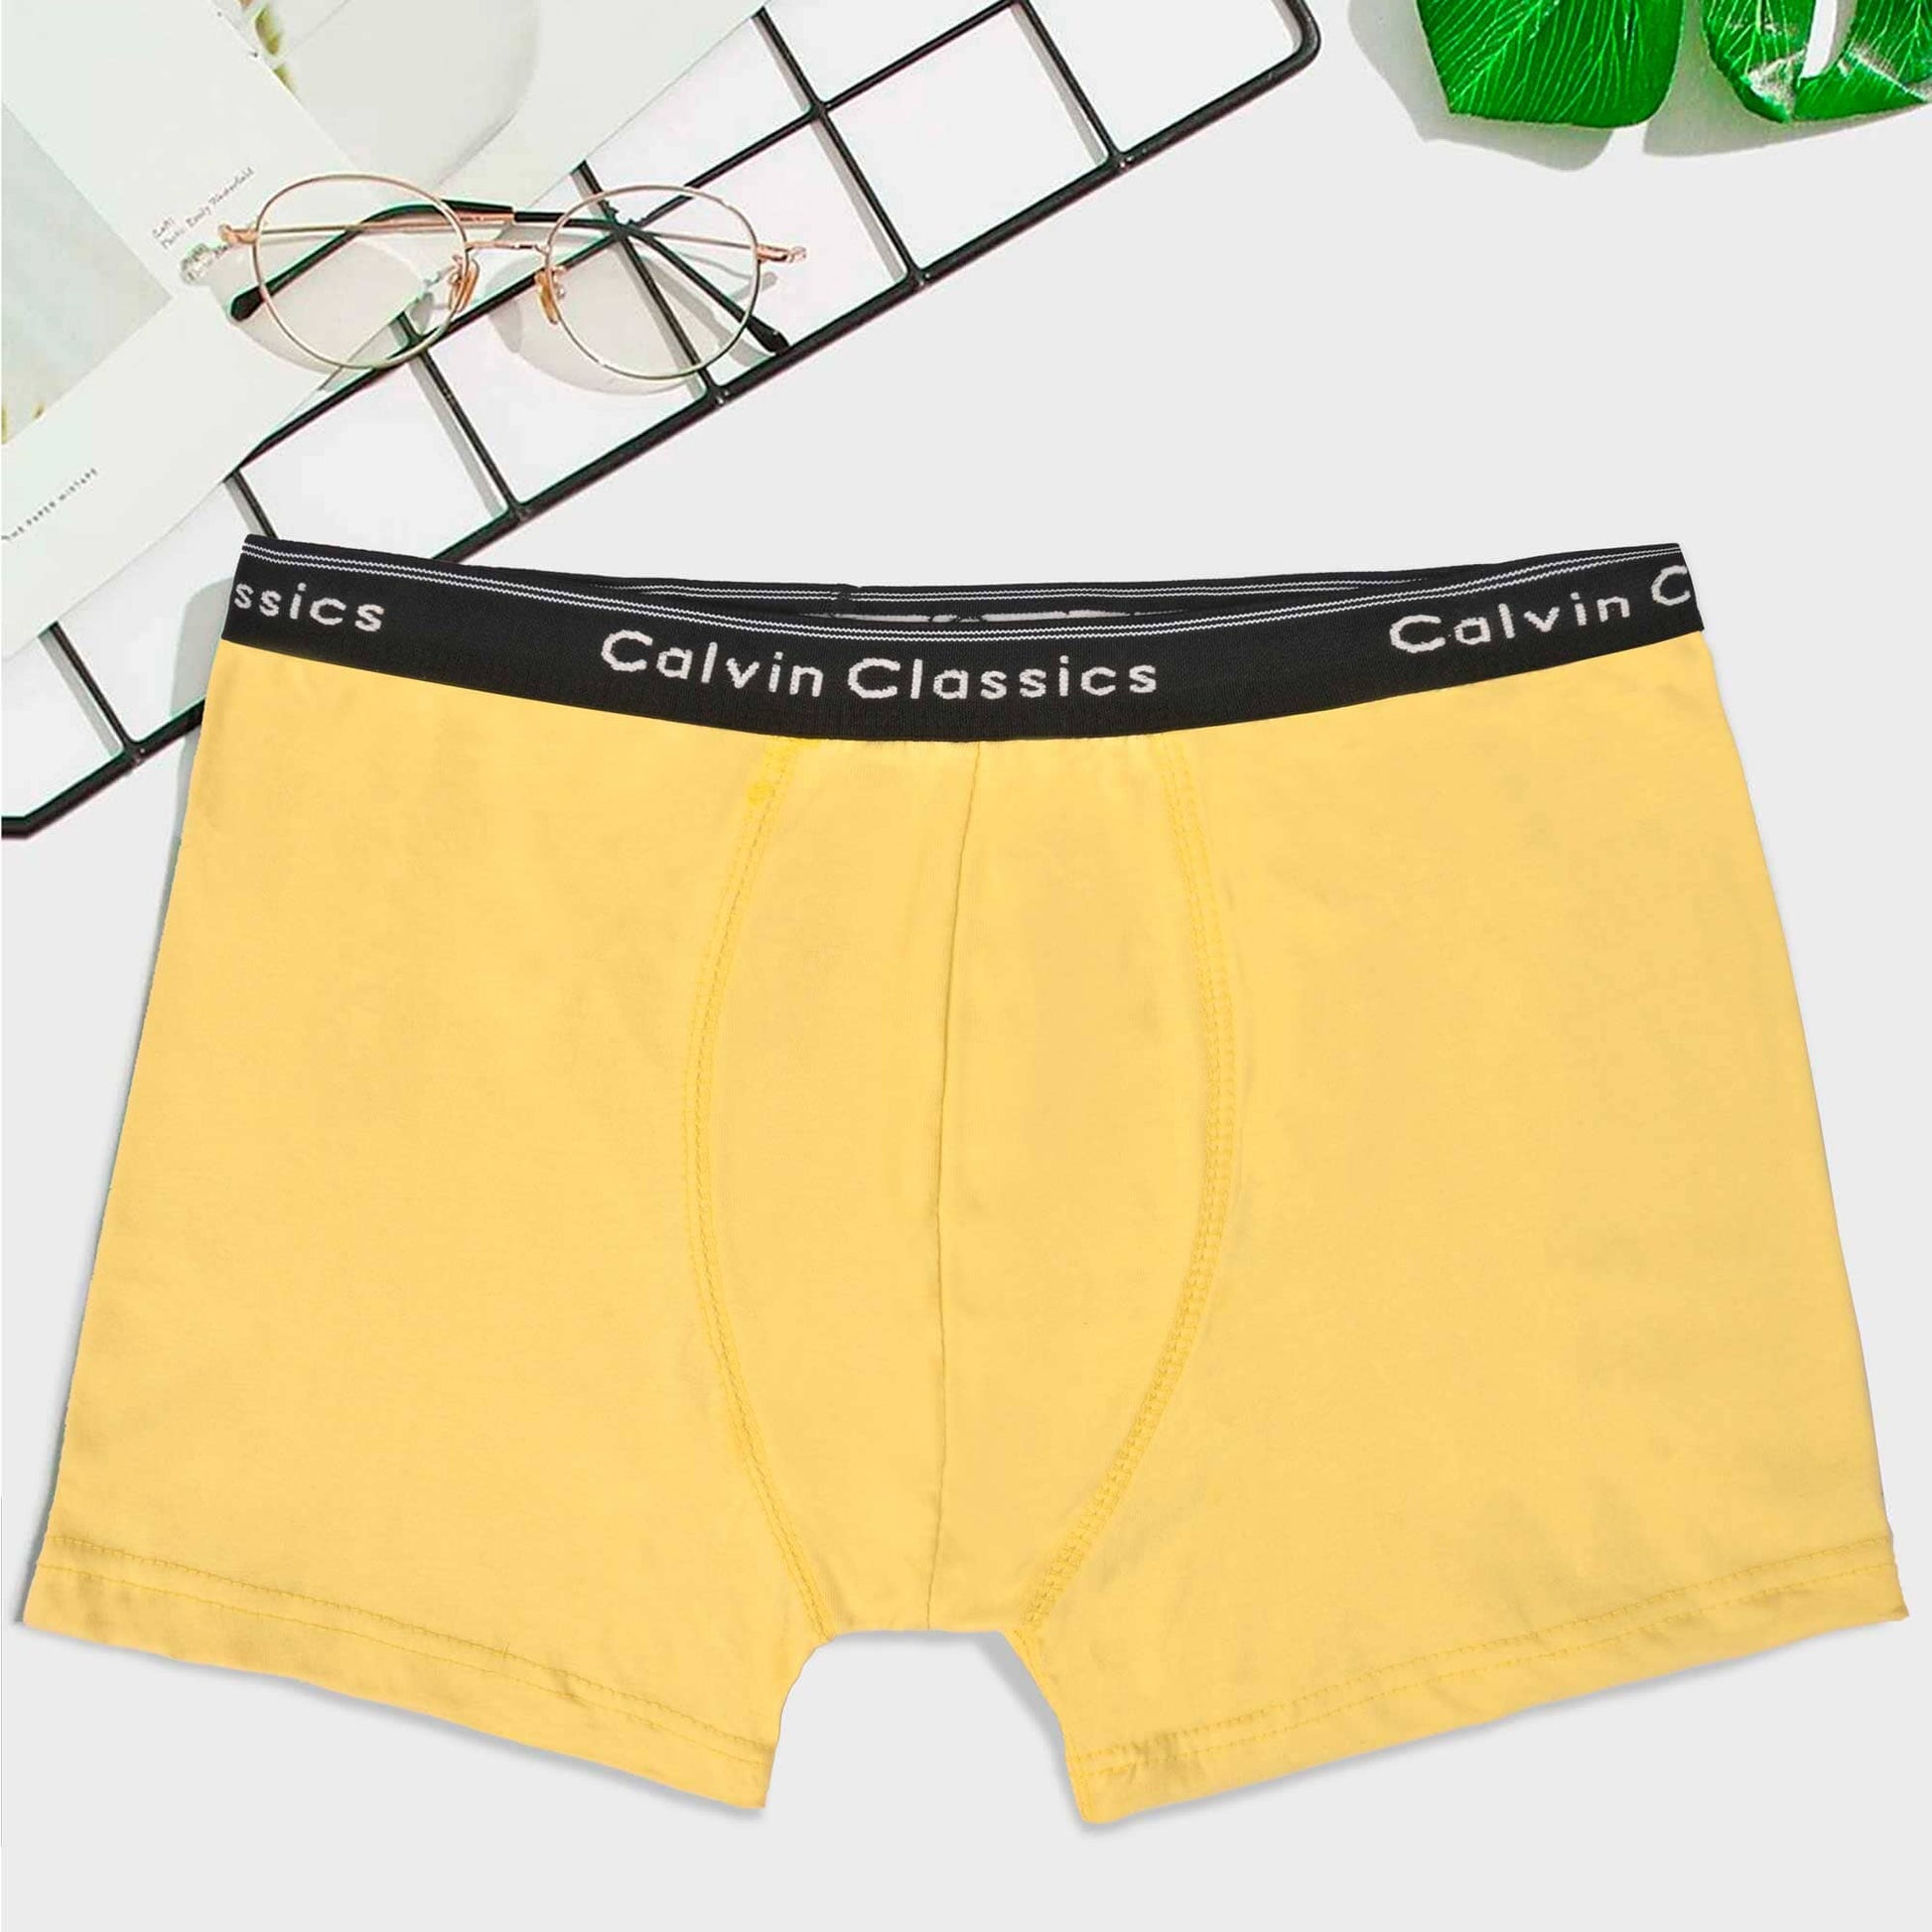 Calvin Classic Men's Boxer Shorts Men's Underwear SZK Yellow S 